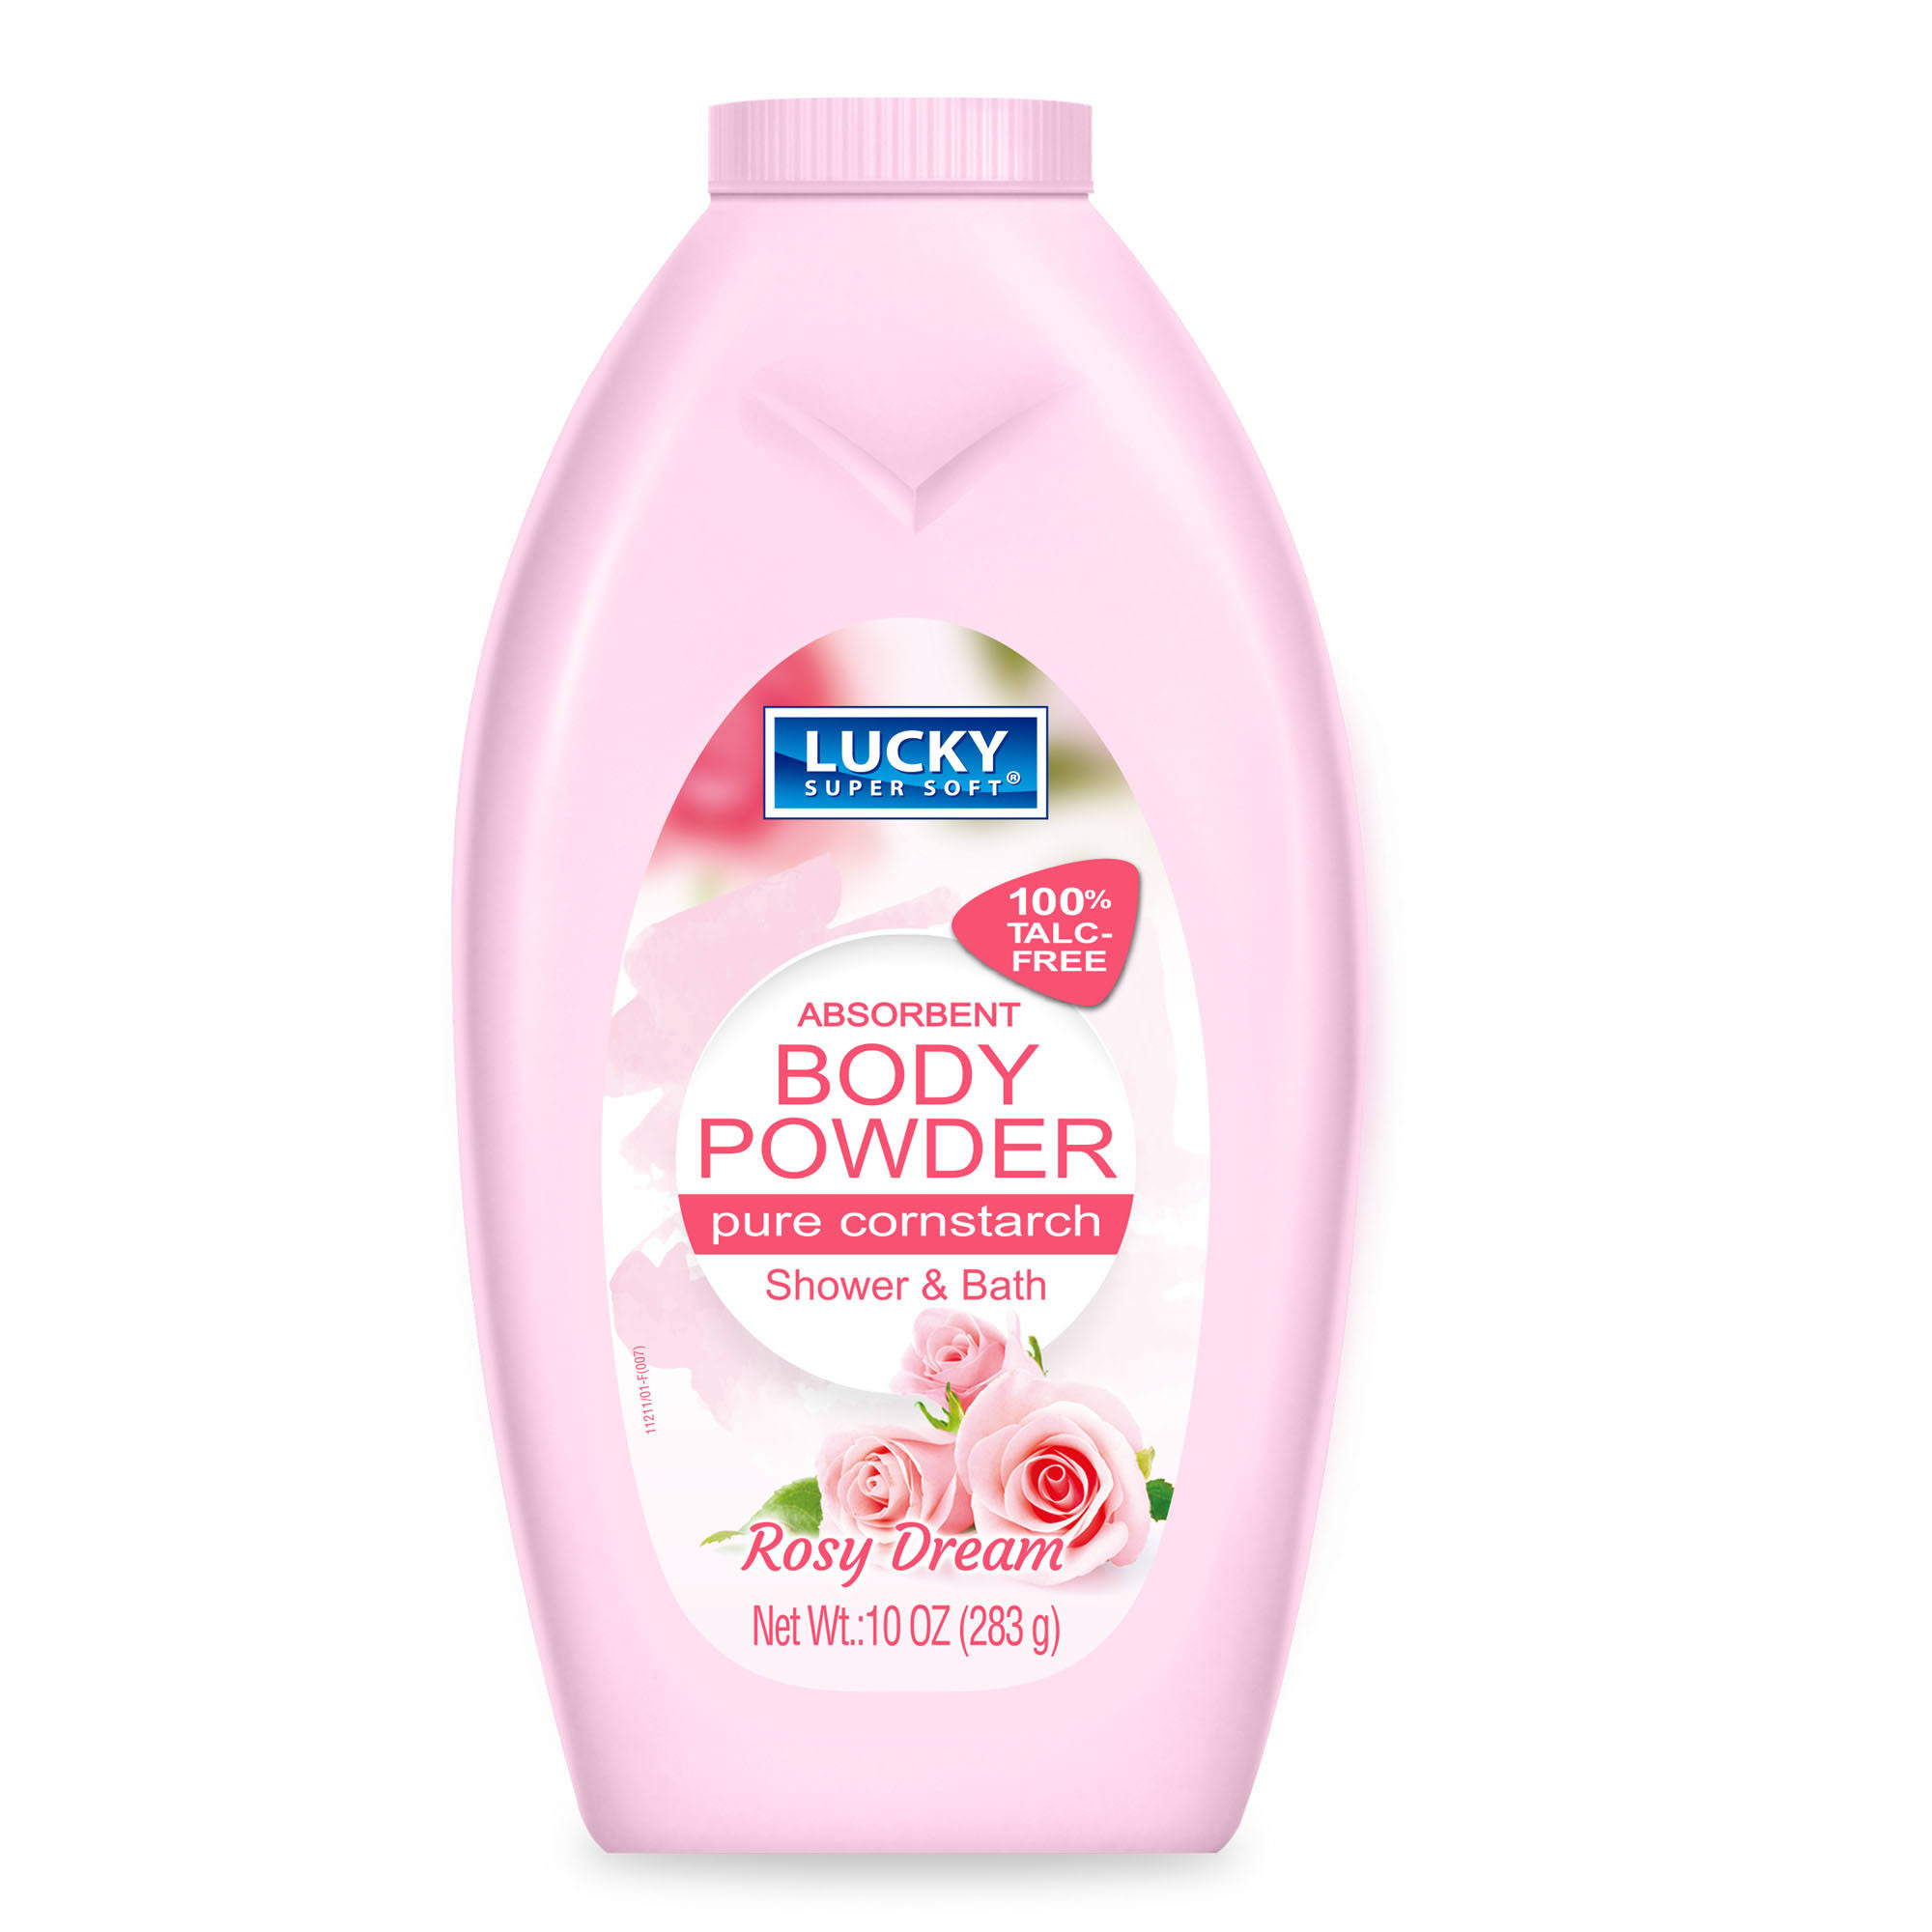 Lucky Super Soft Absorbent Body Powder, Rosy Dream, 10 oz